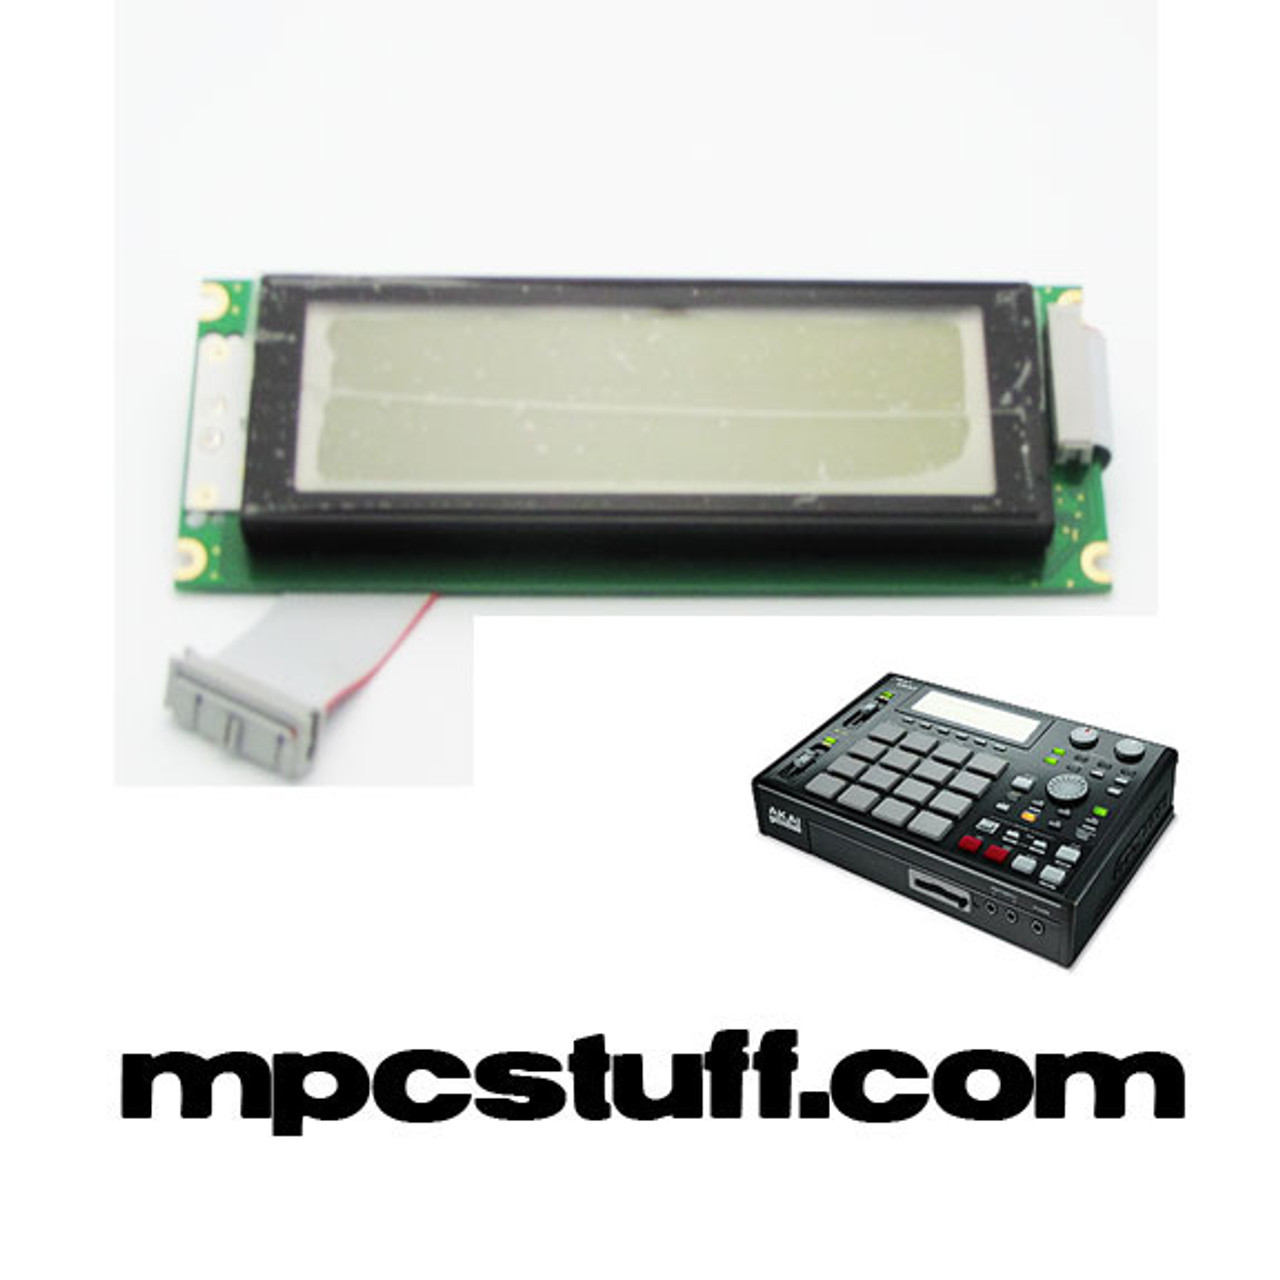 Akai MPC 1000 Bright White Back light LCD Screen Replacement